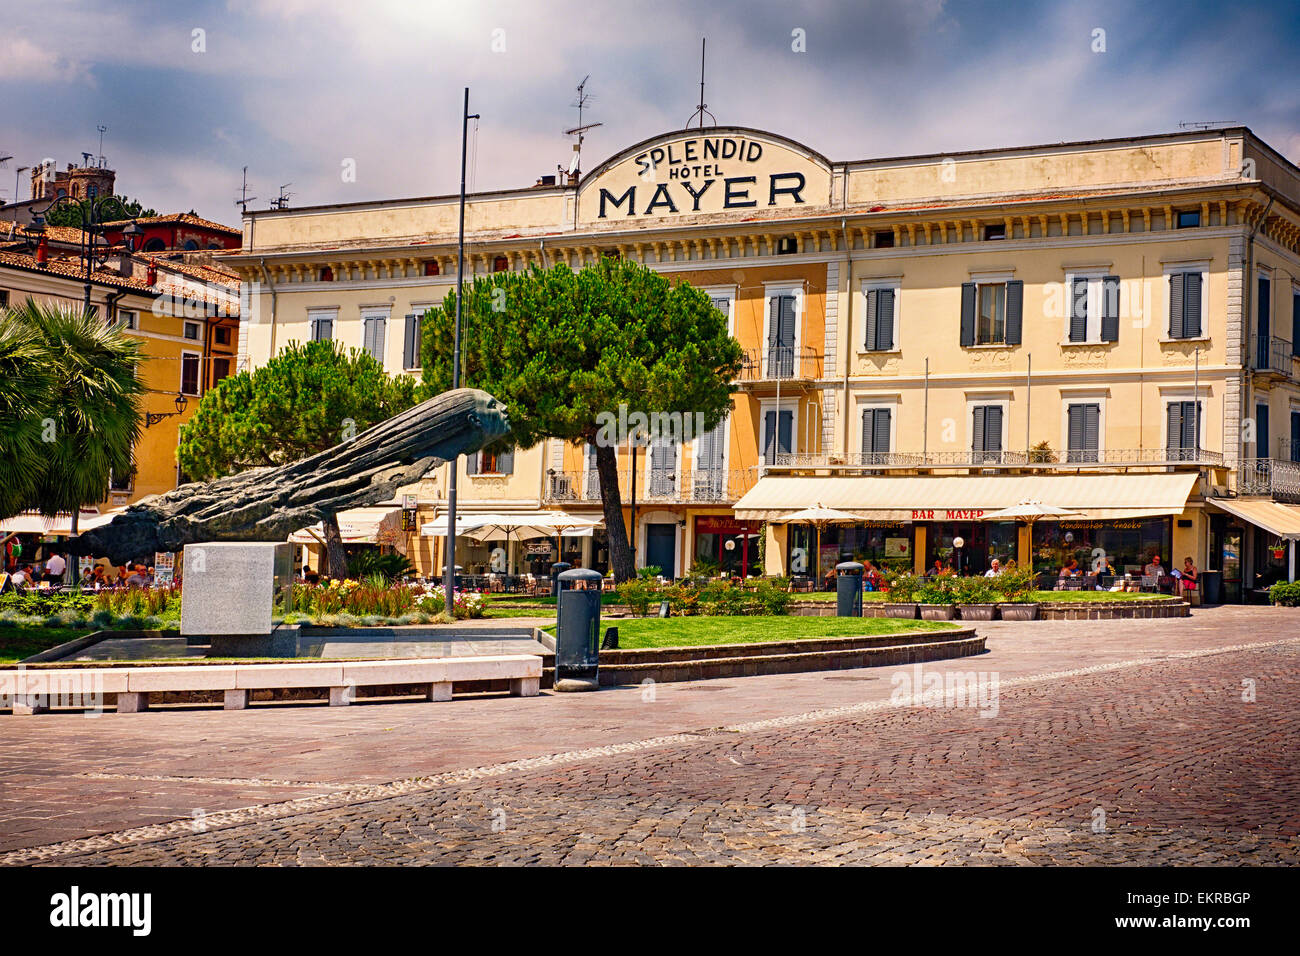 Frontal View of the Hotel Mayer and  Splendid, Desenzano del Garda, Italy Stock Photo